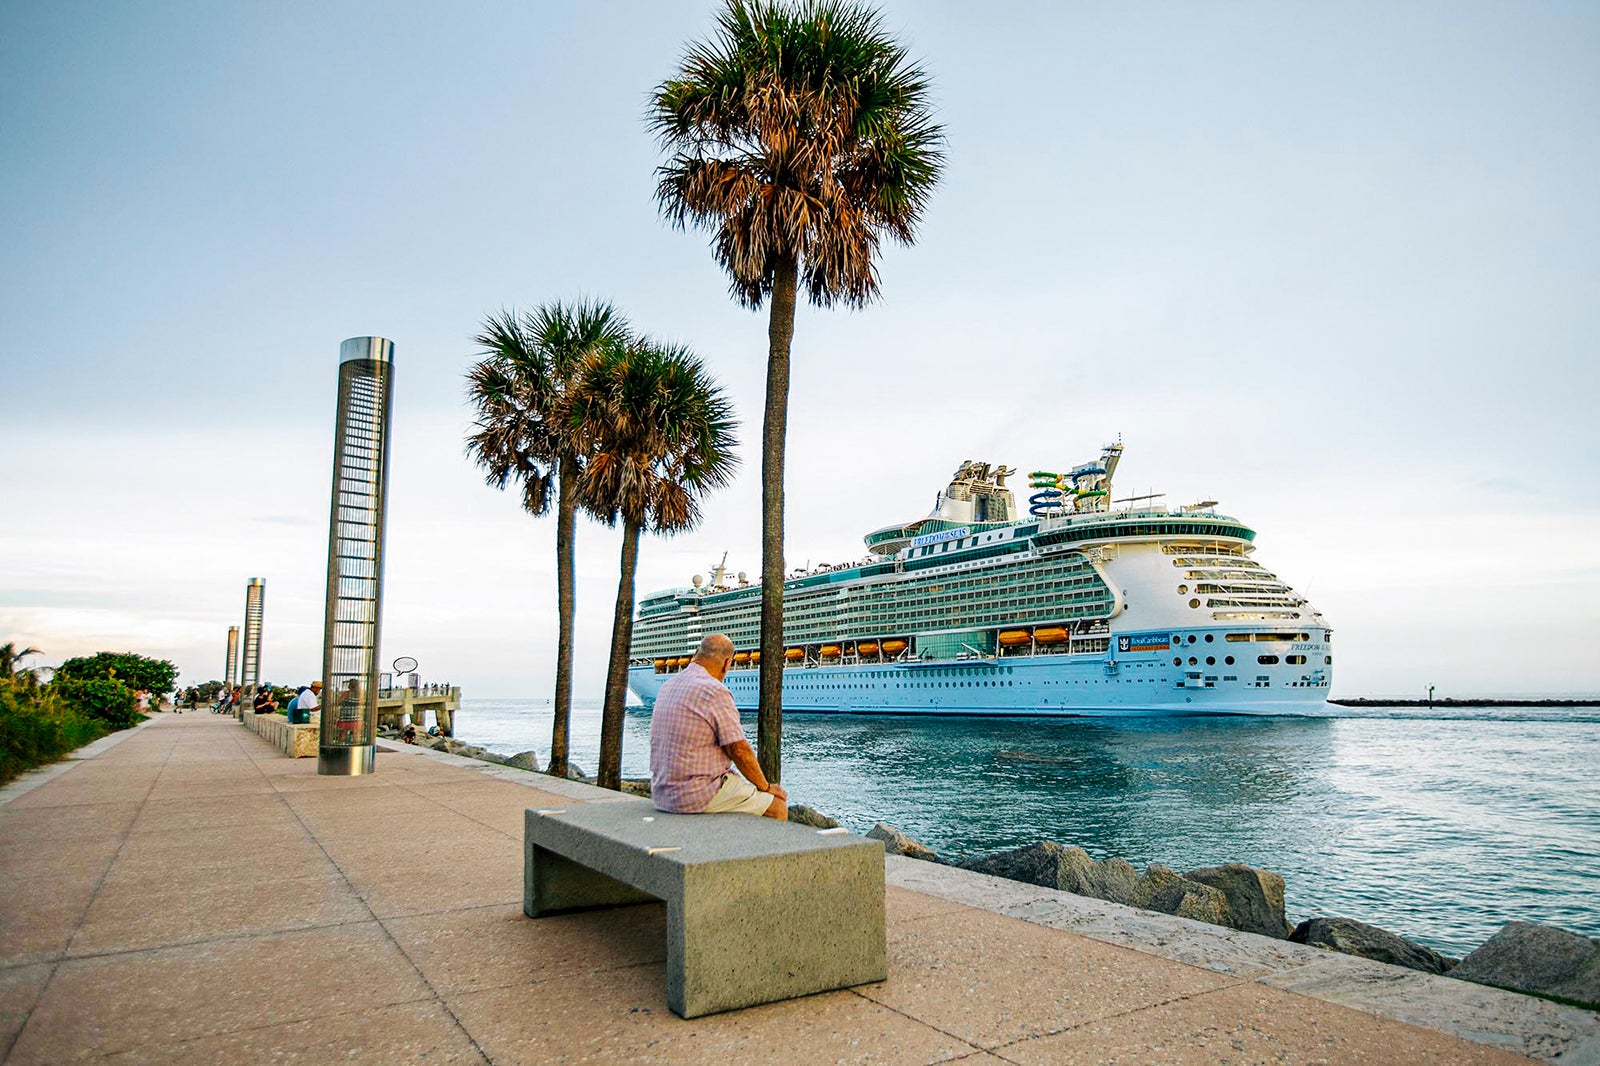 cruise ship sailing near shoreline and palm trees